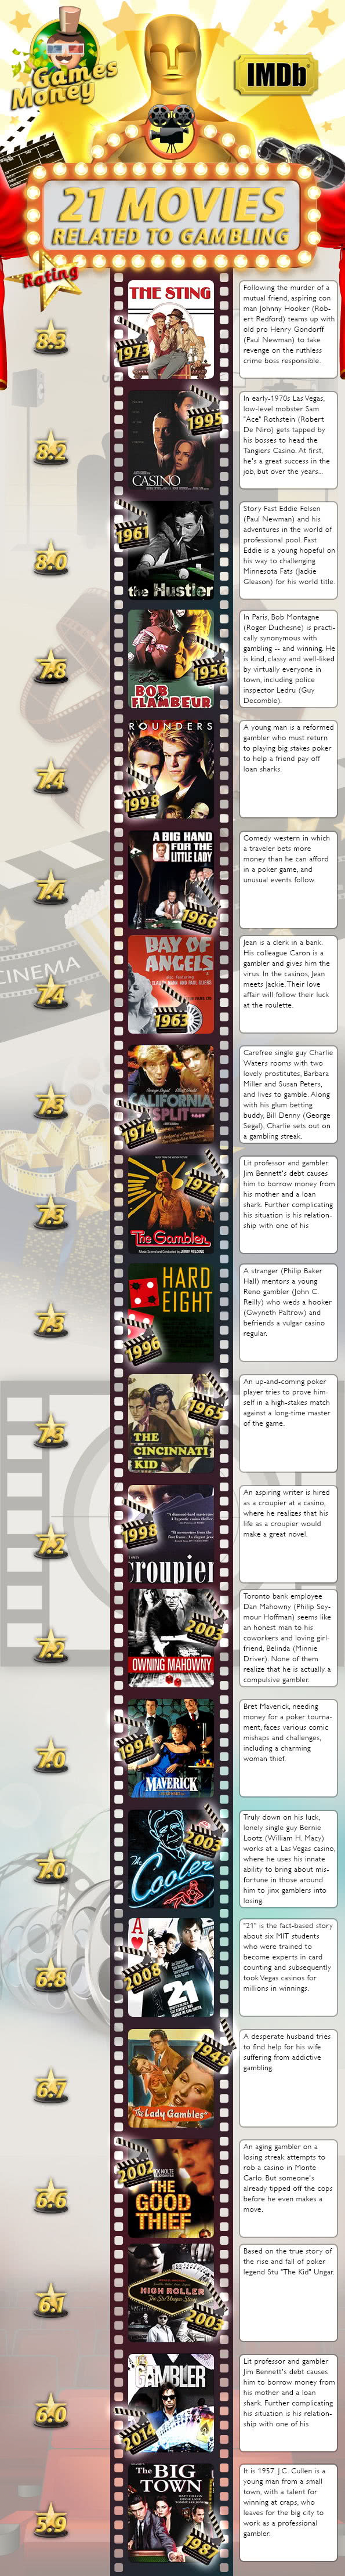 21 Casino Movies - Infographic By GamesMoney.Com